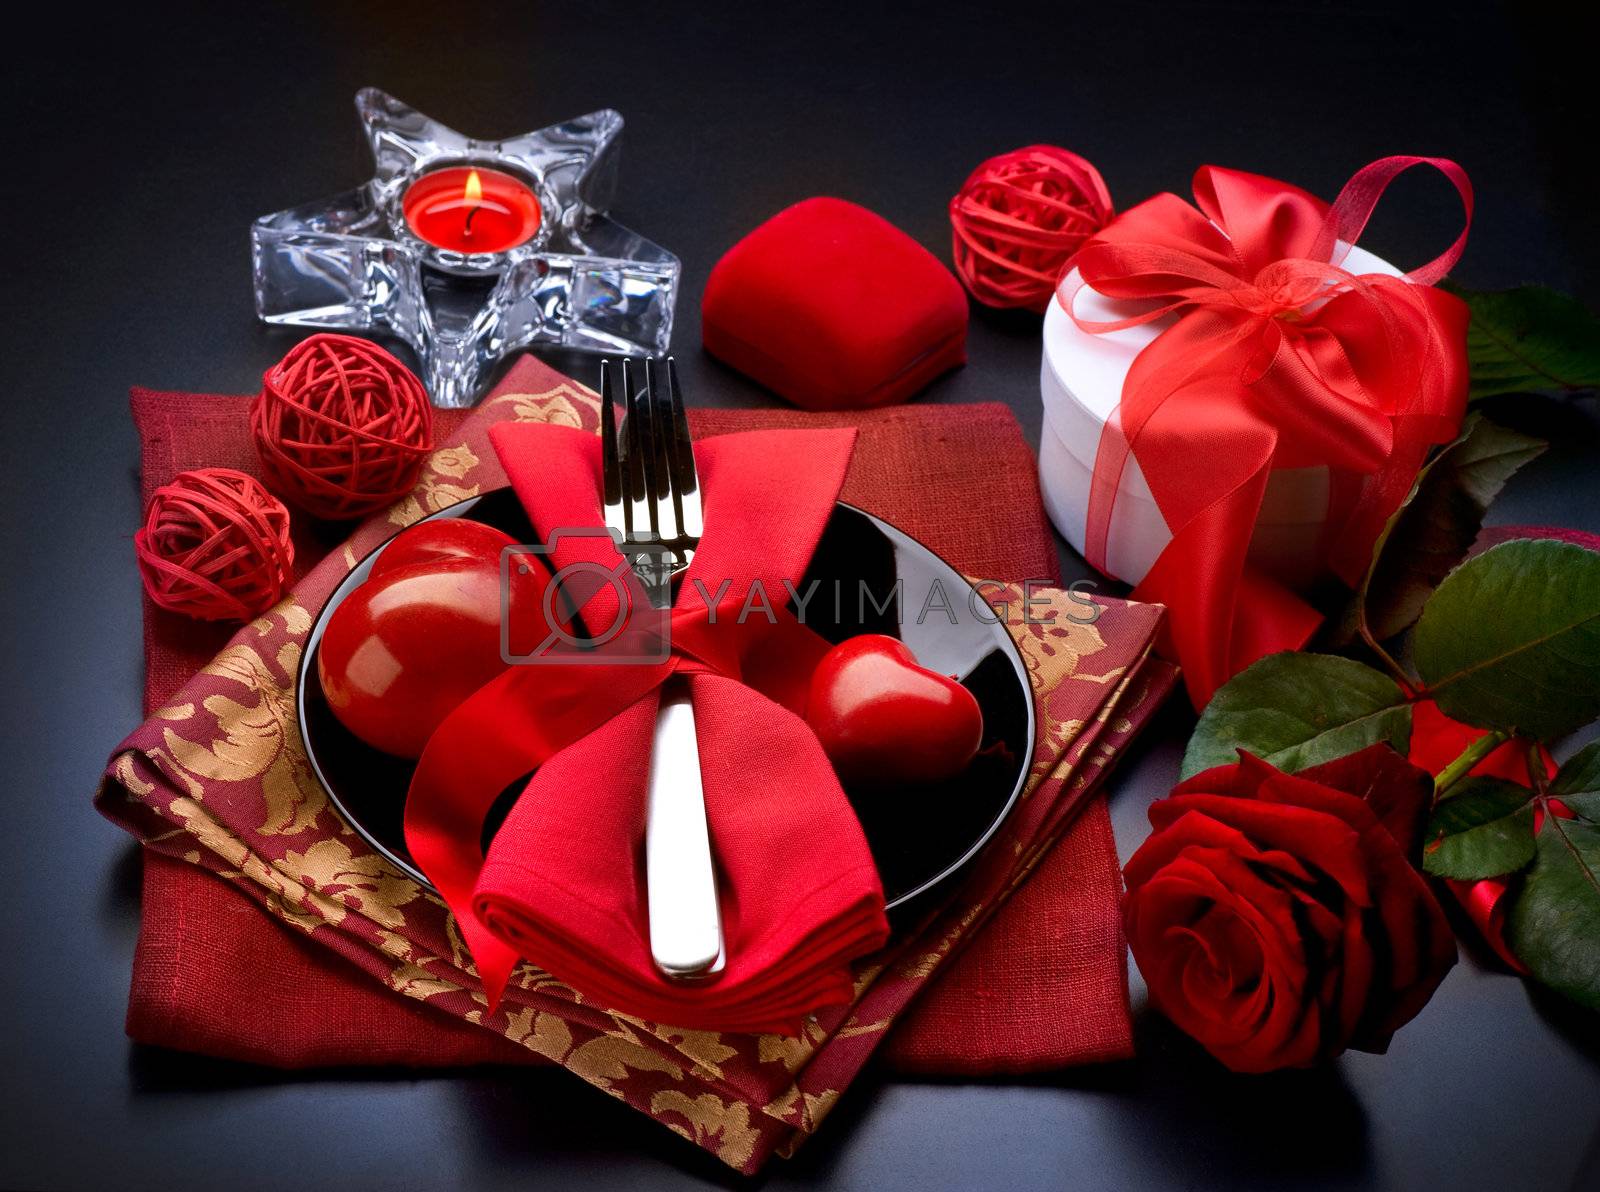 Royalty free image of Valentine Romantic Dinner by SubbotinaA